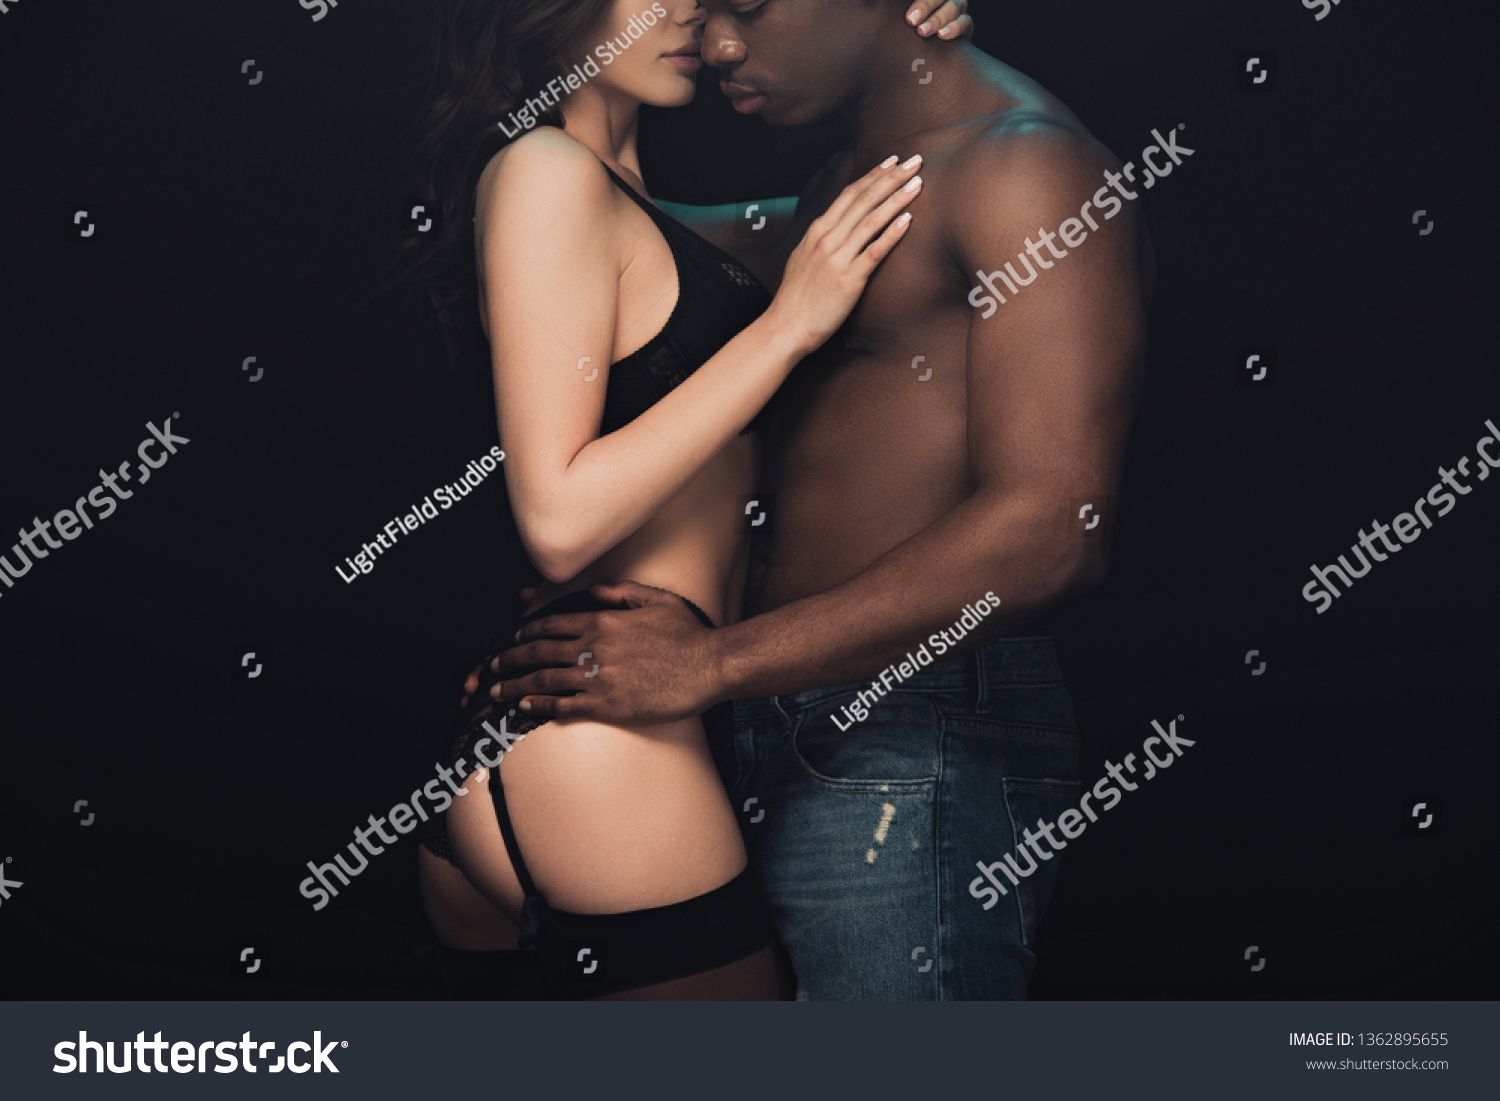 Nude African-American Couple Embracing